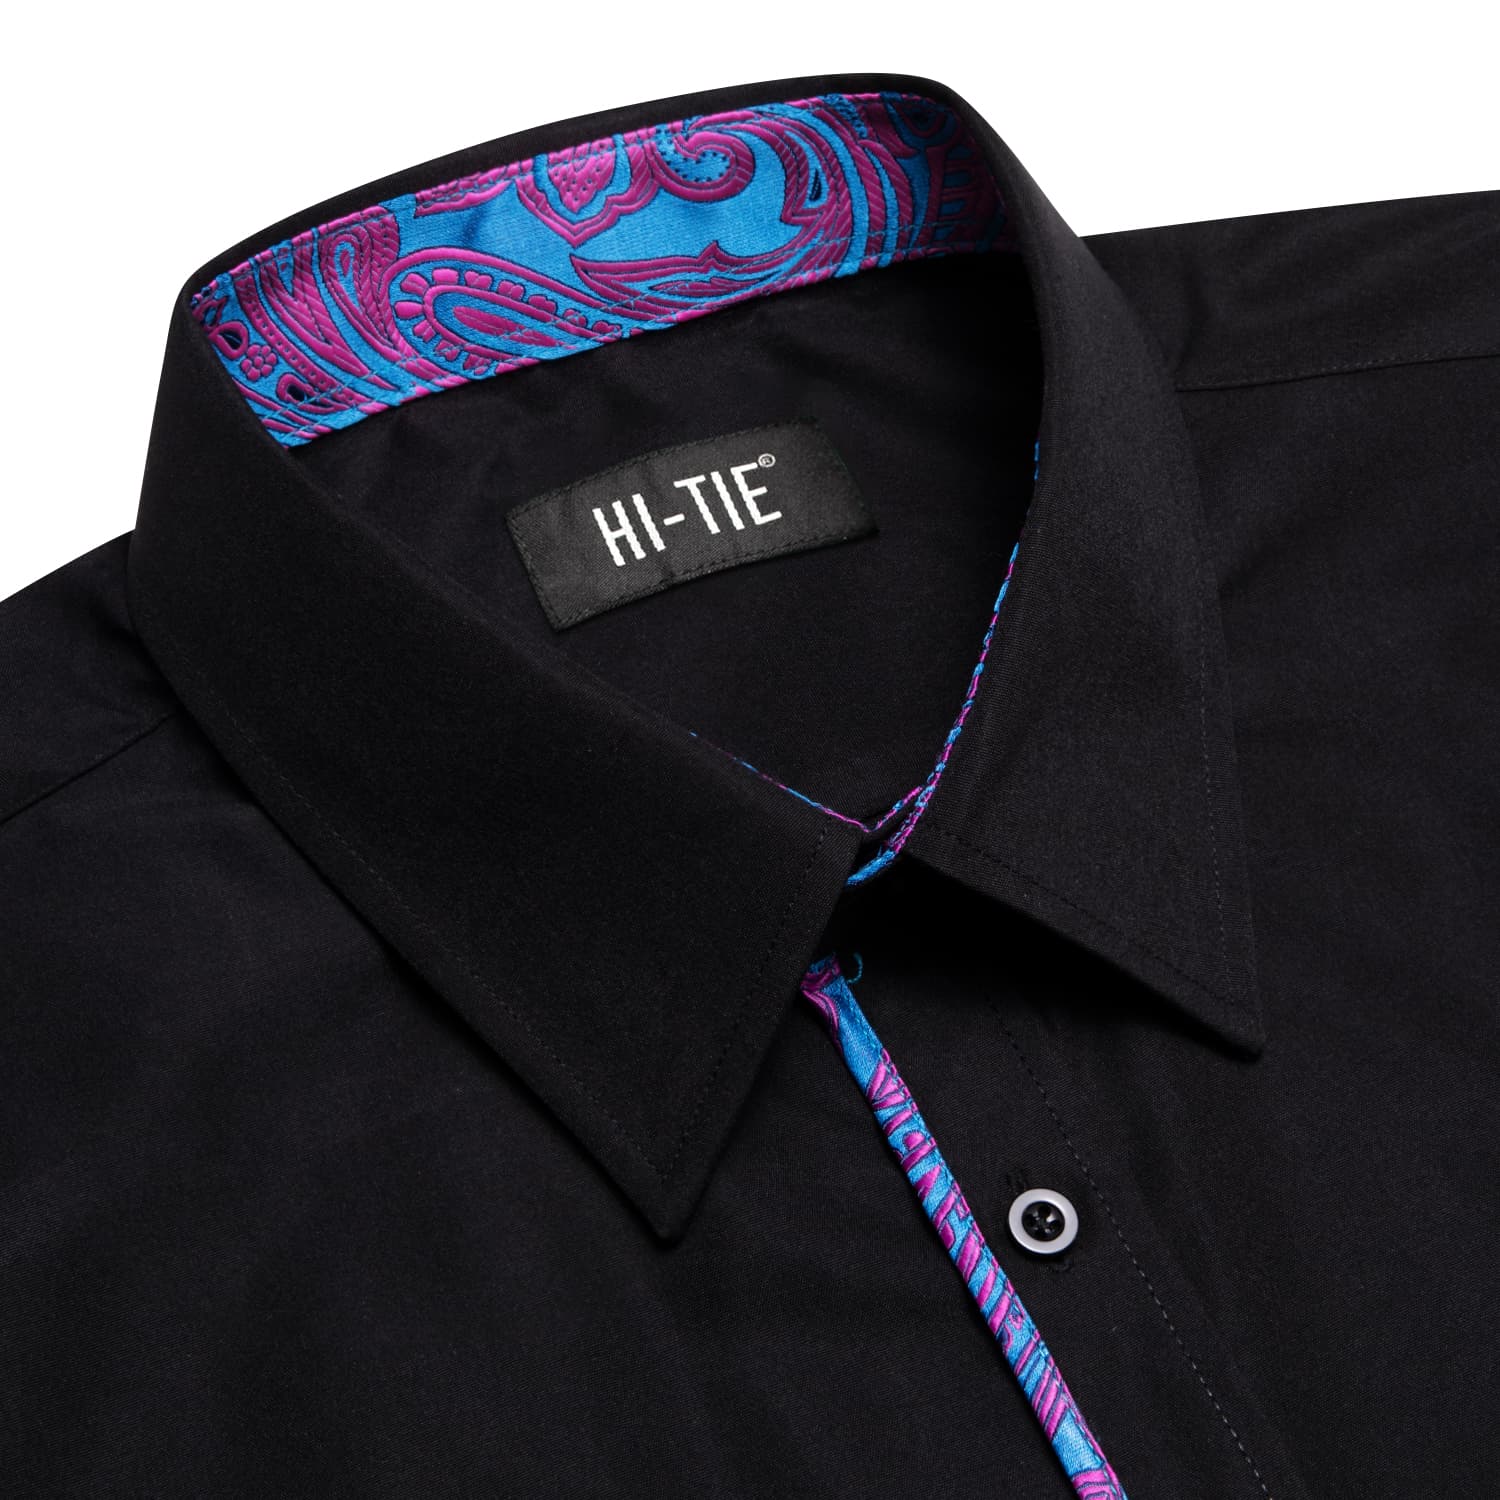 Hi-Tie Black Shirt with Fuchsia CornflowerBlue Jacquard Collar Solid Shirt